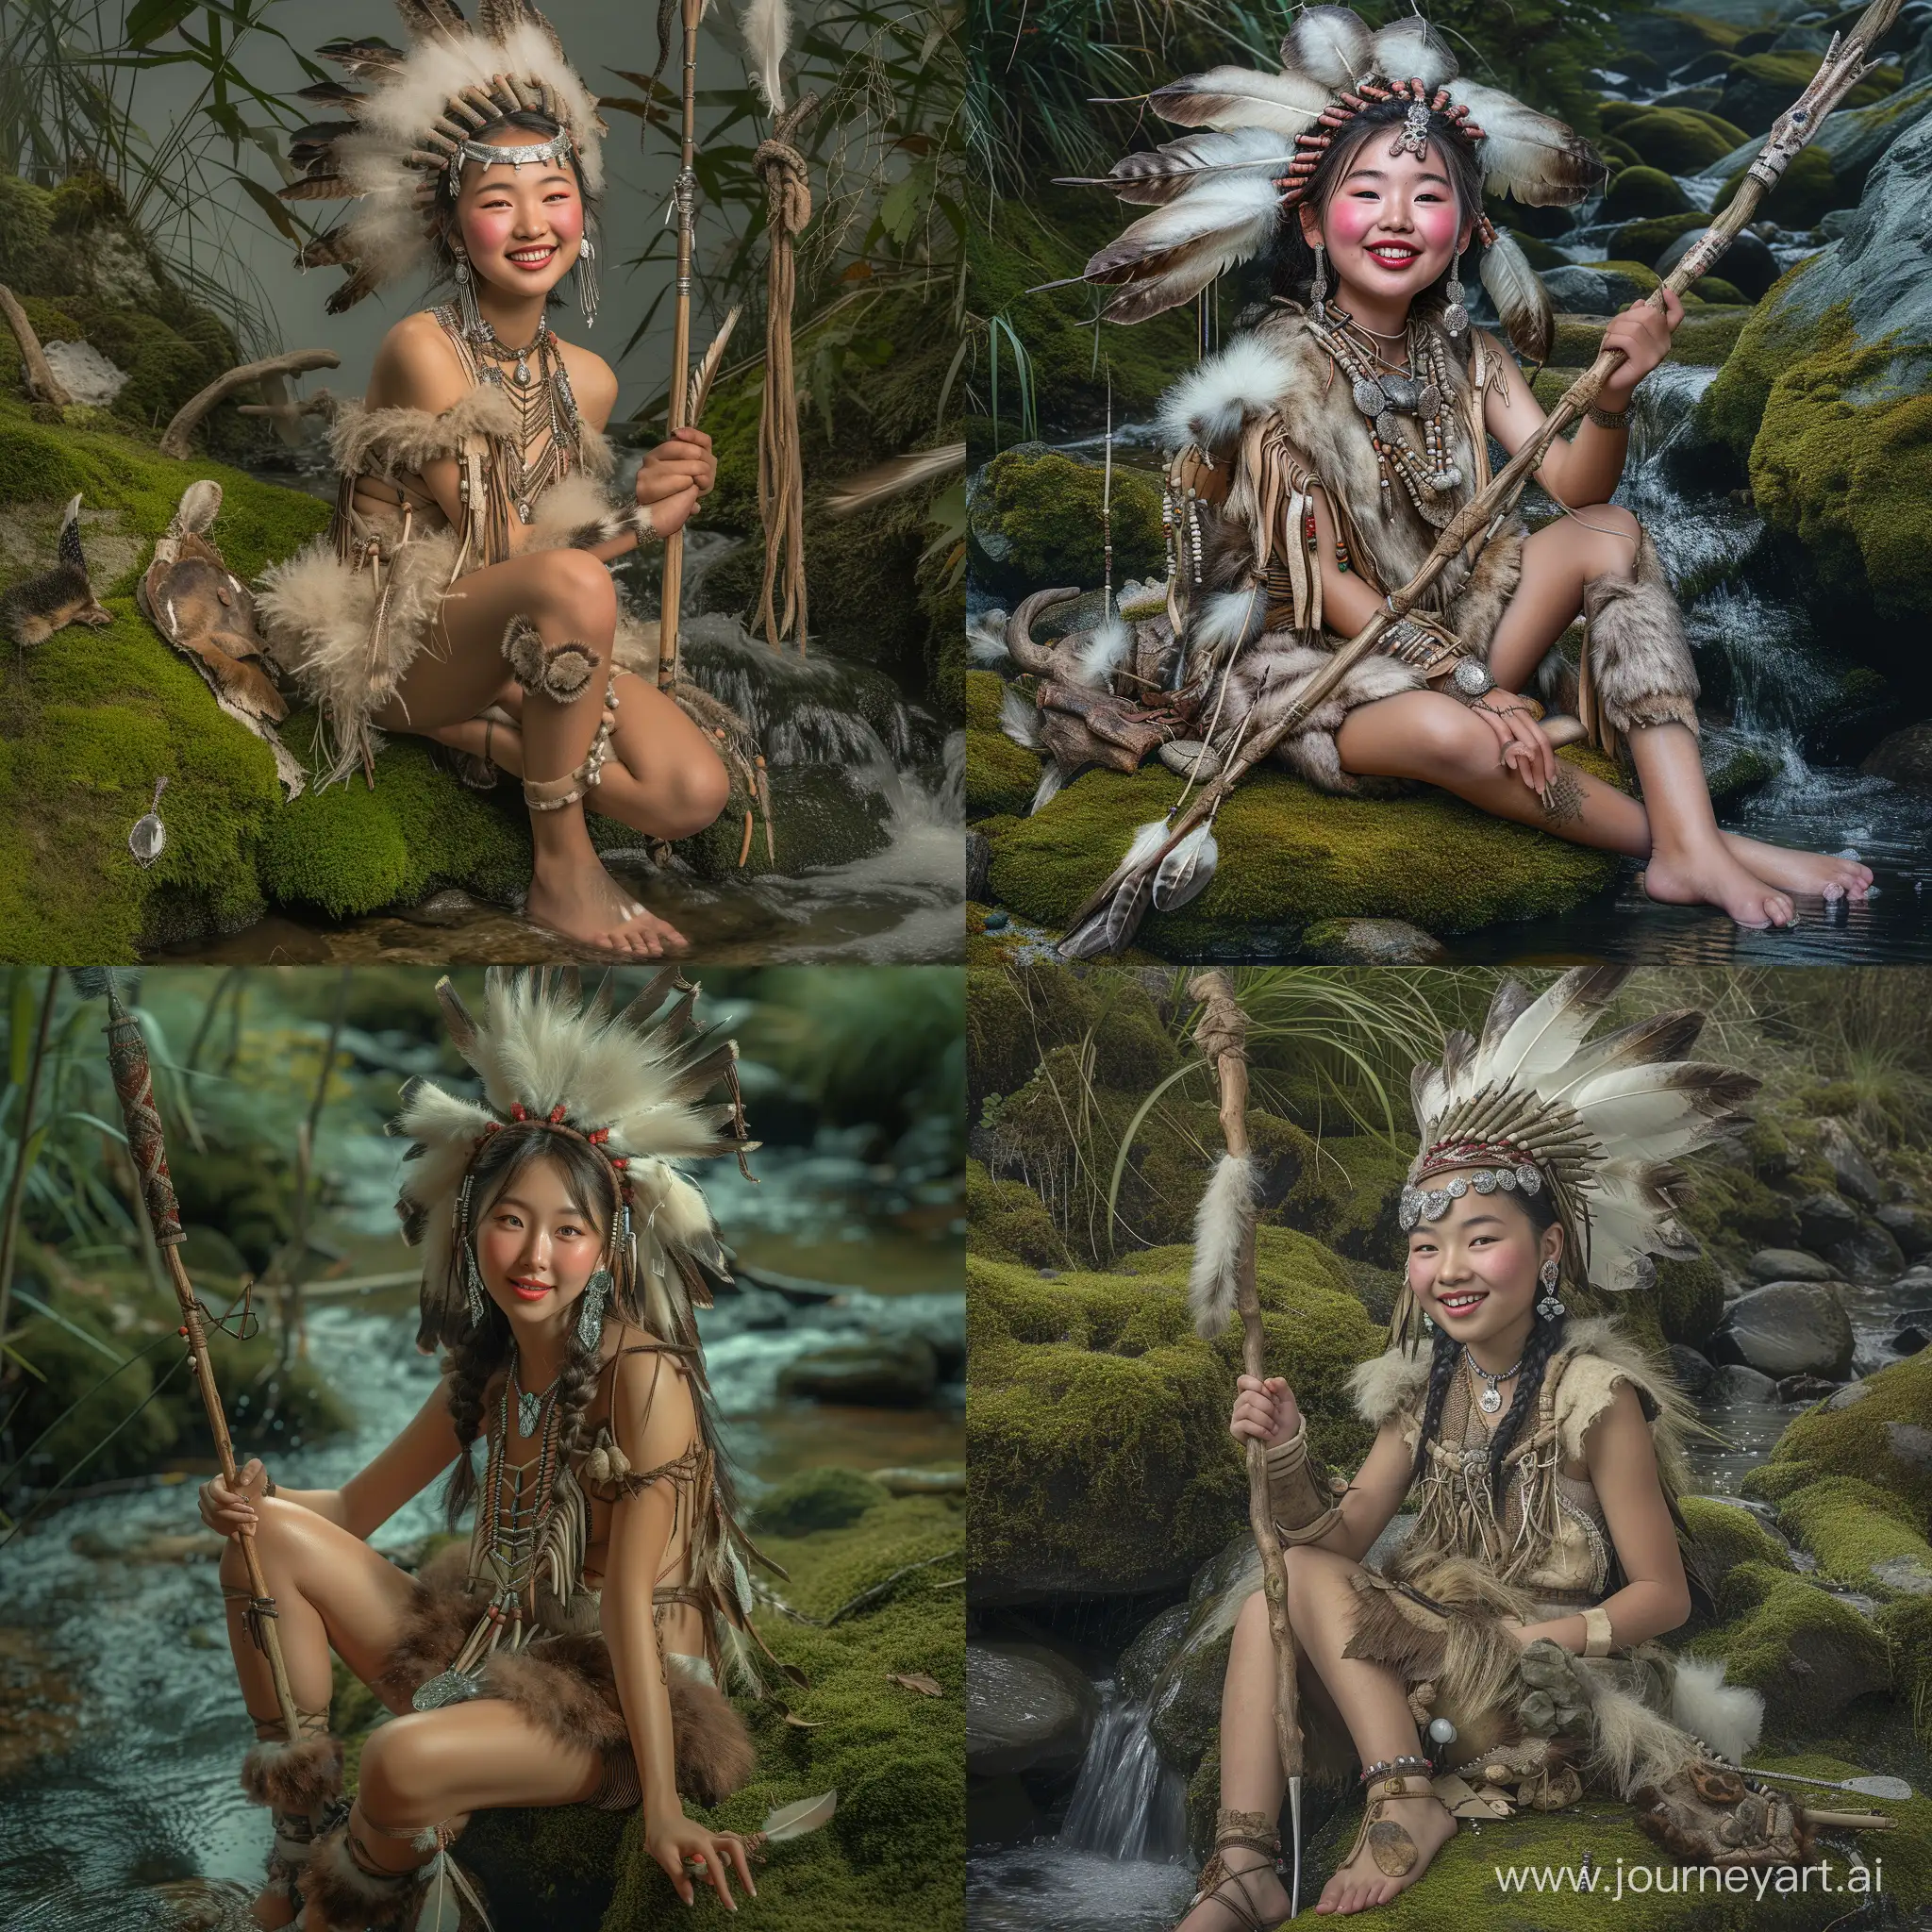 Joyful-Asian-Woman-in-Traditional-Native-American-Attire-by-Mossy-Stream